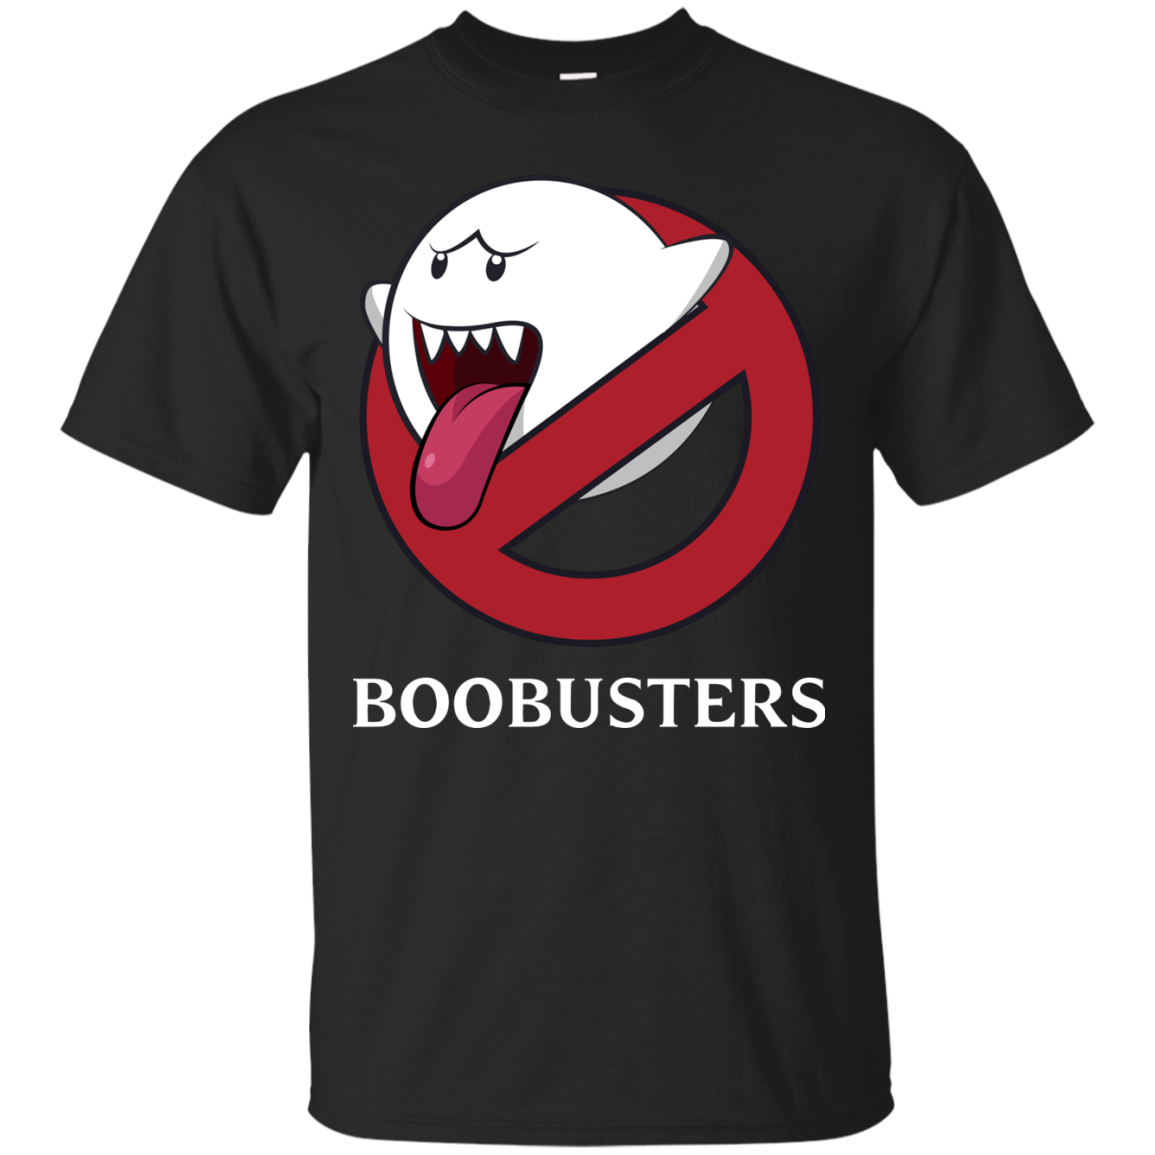 Boobusters T-Shirt